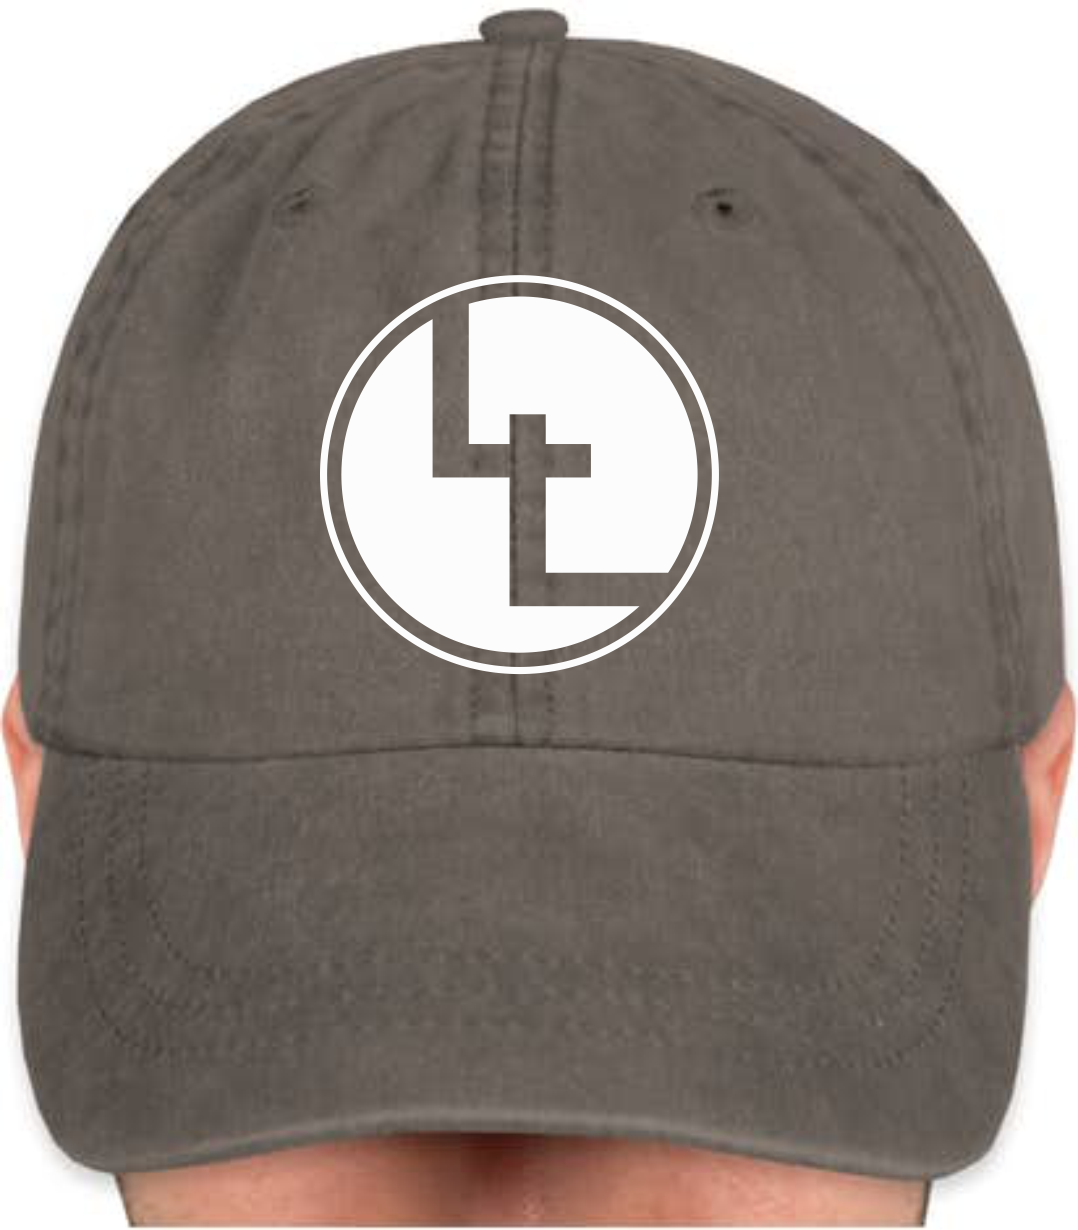 Leadership Lab Charcoal Hat